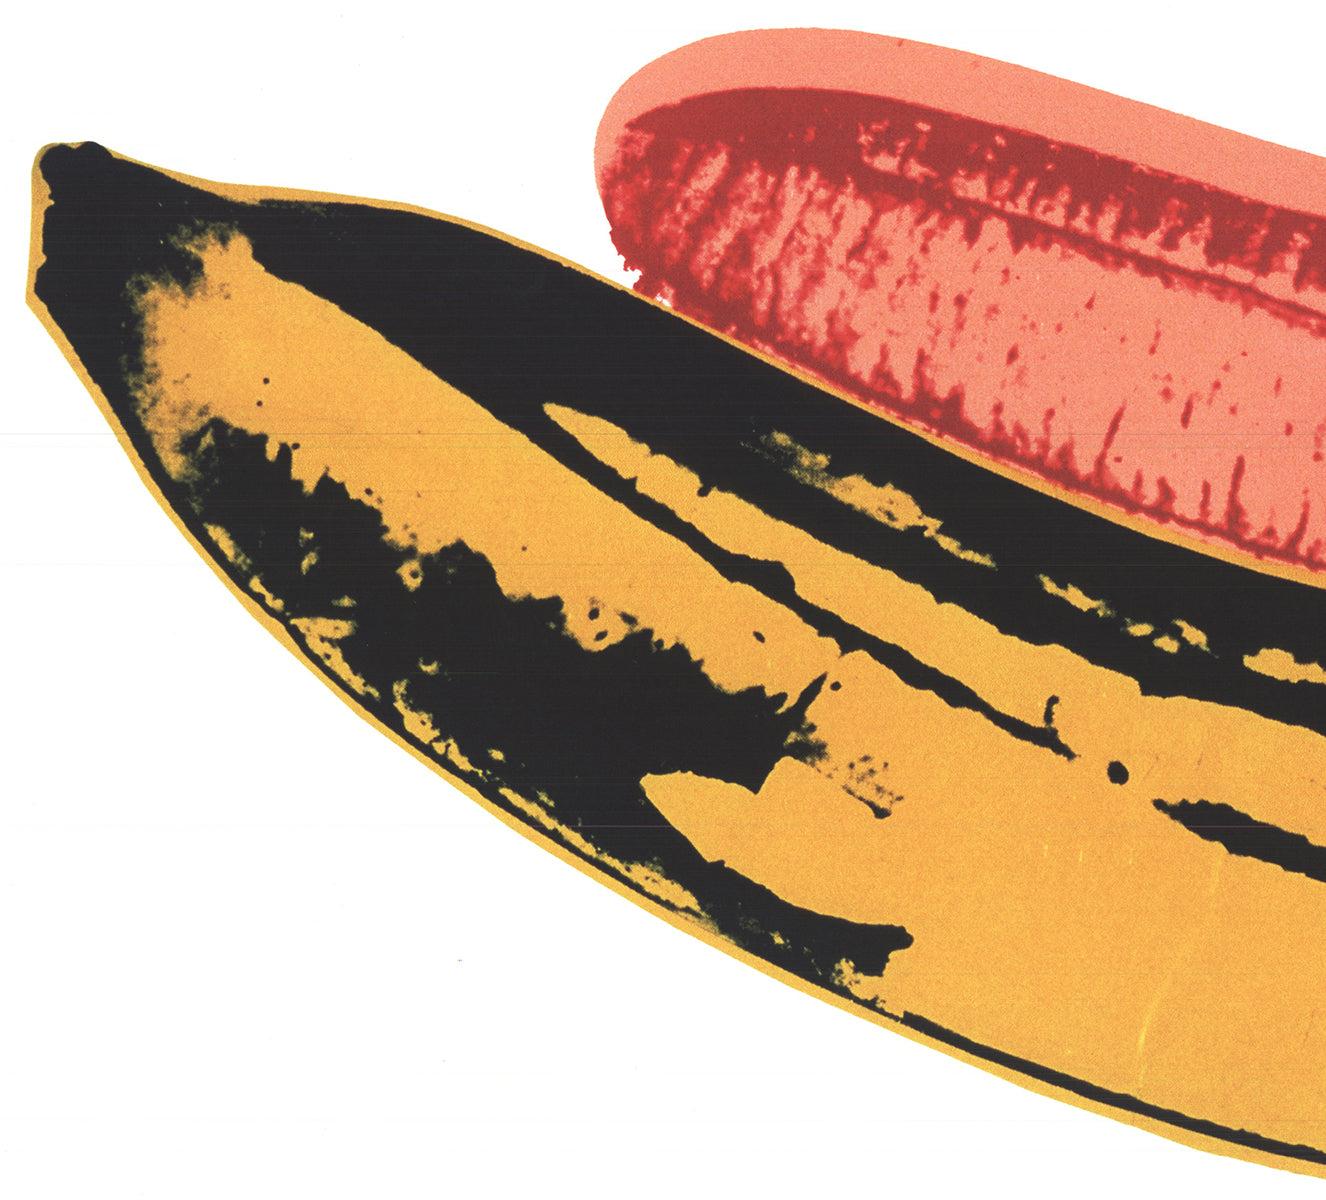 Andy Warhol 'Banana' 2010- Offset Lithograph For Sale 2